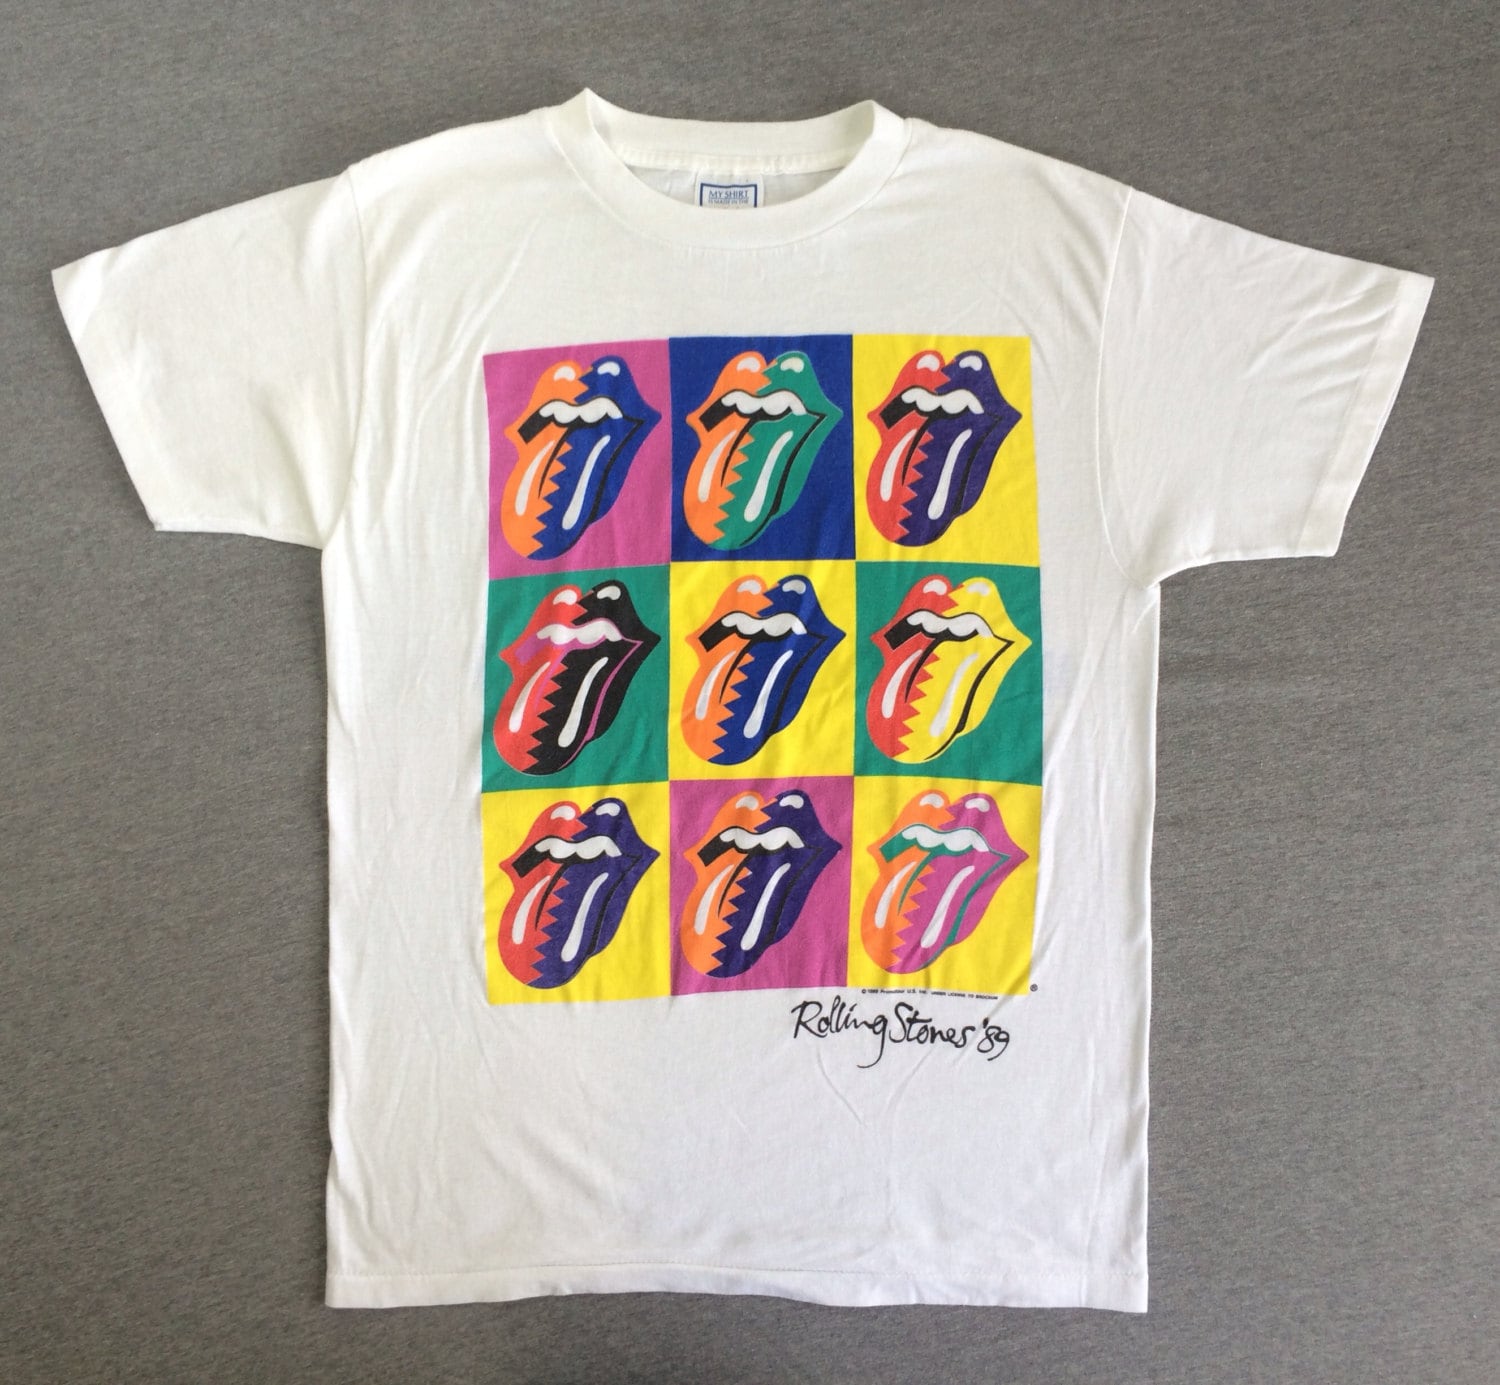 1989 rolling stones tour shirt